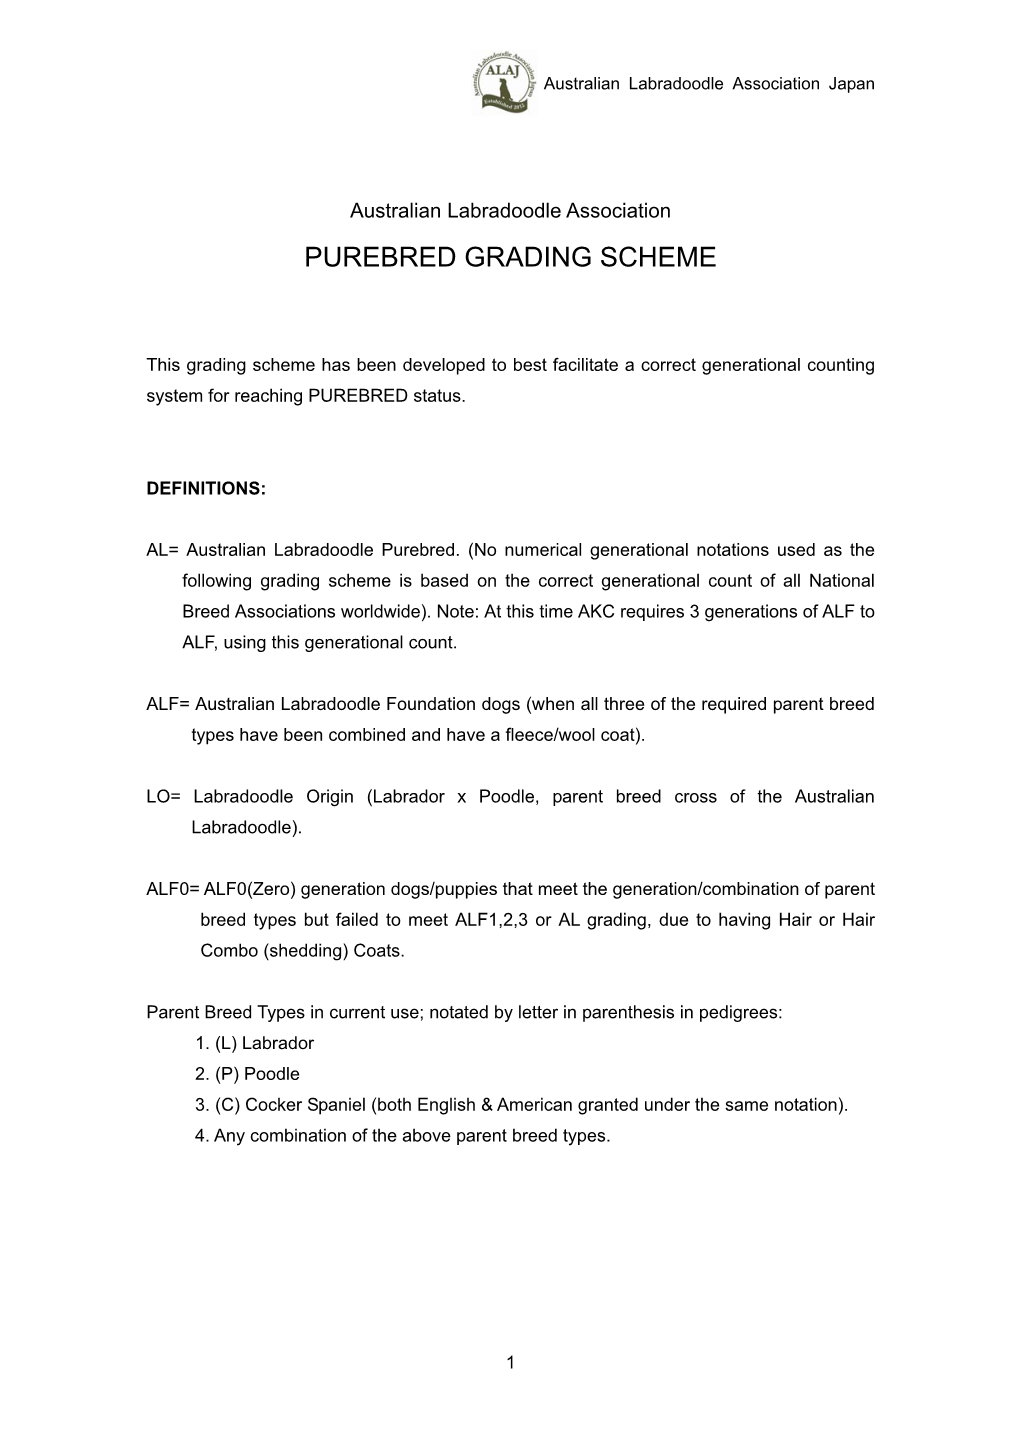 Purebred Grading Scheme